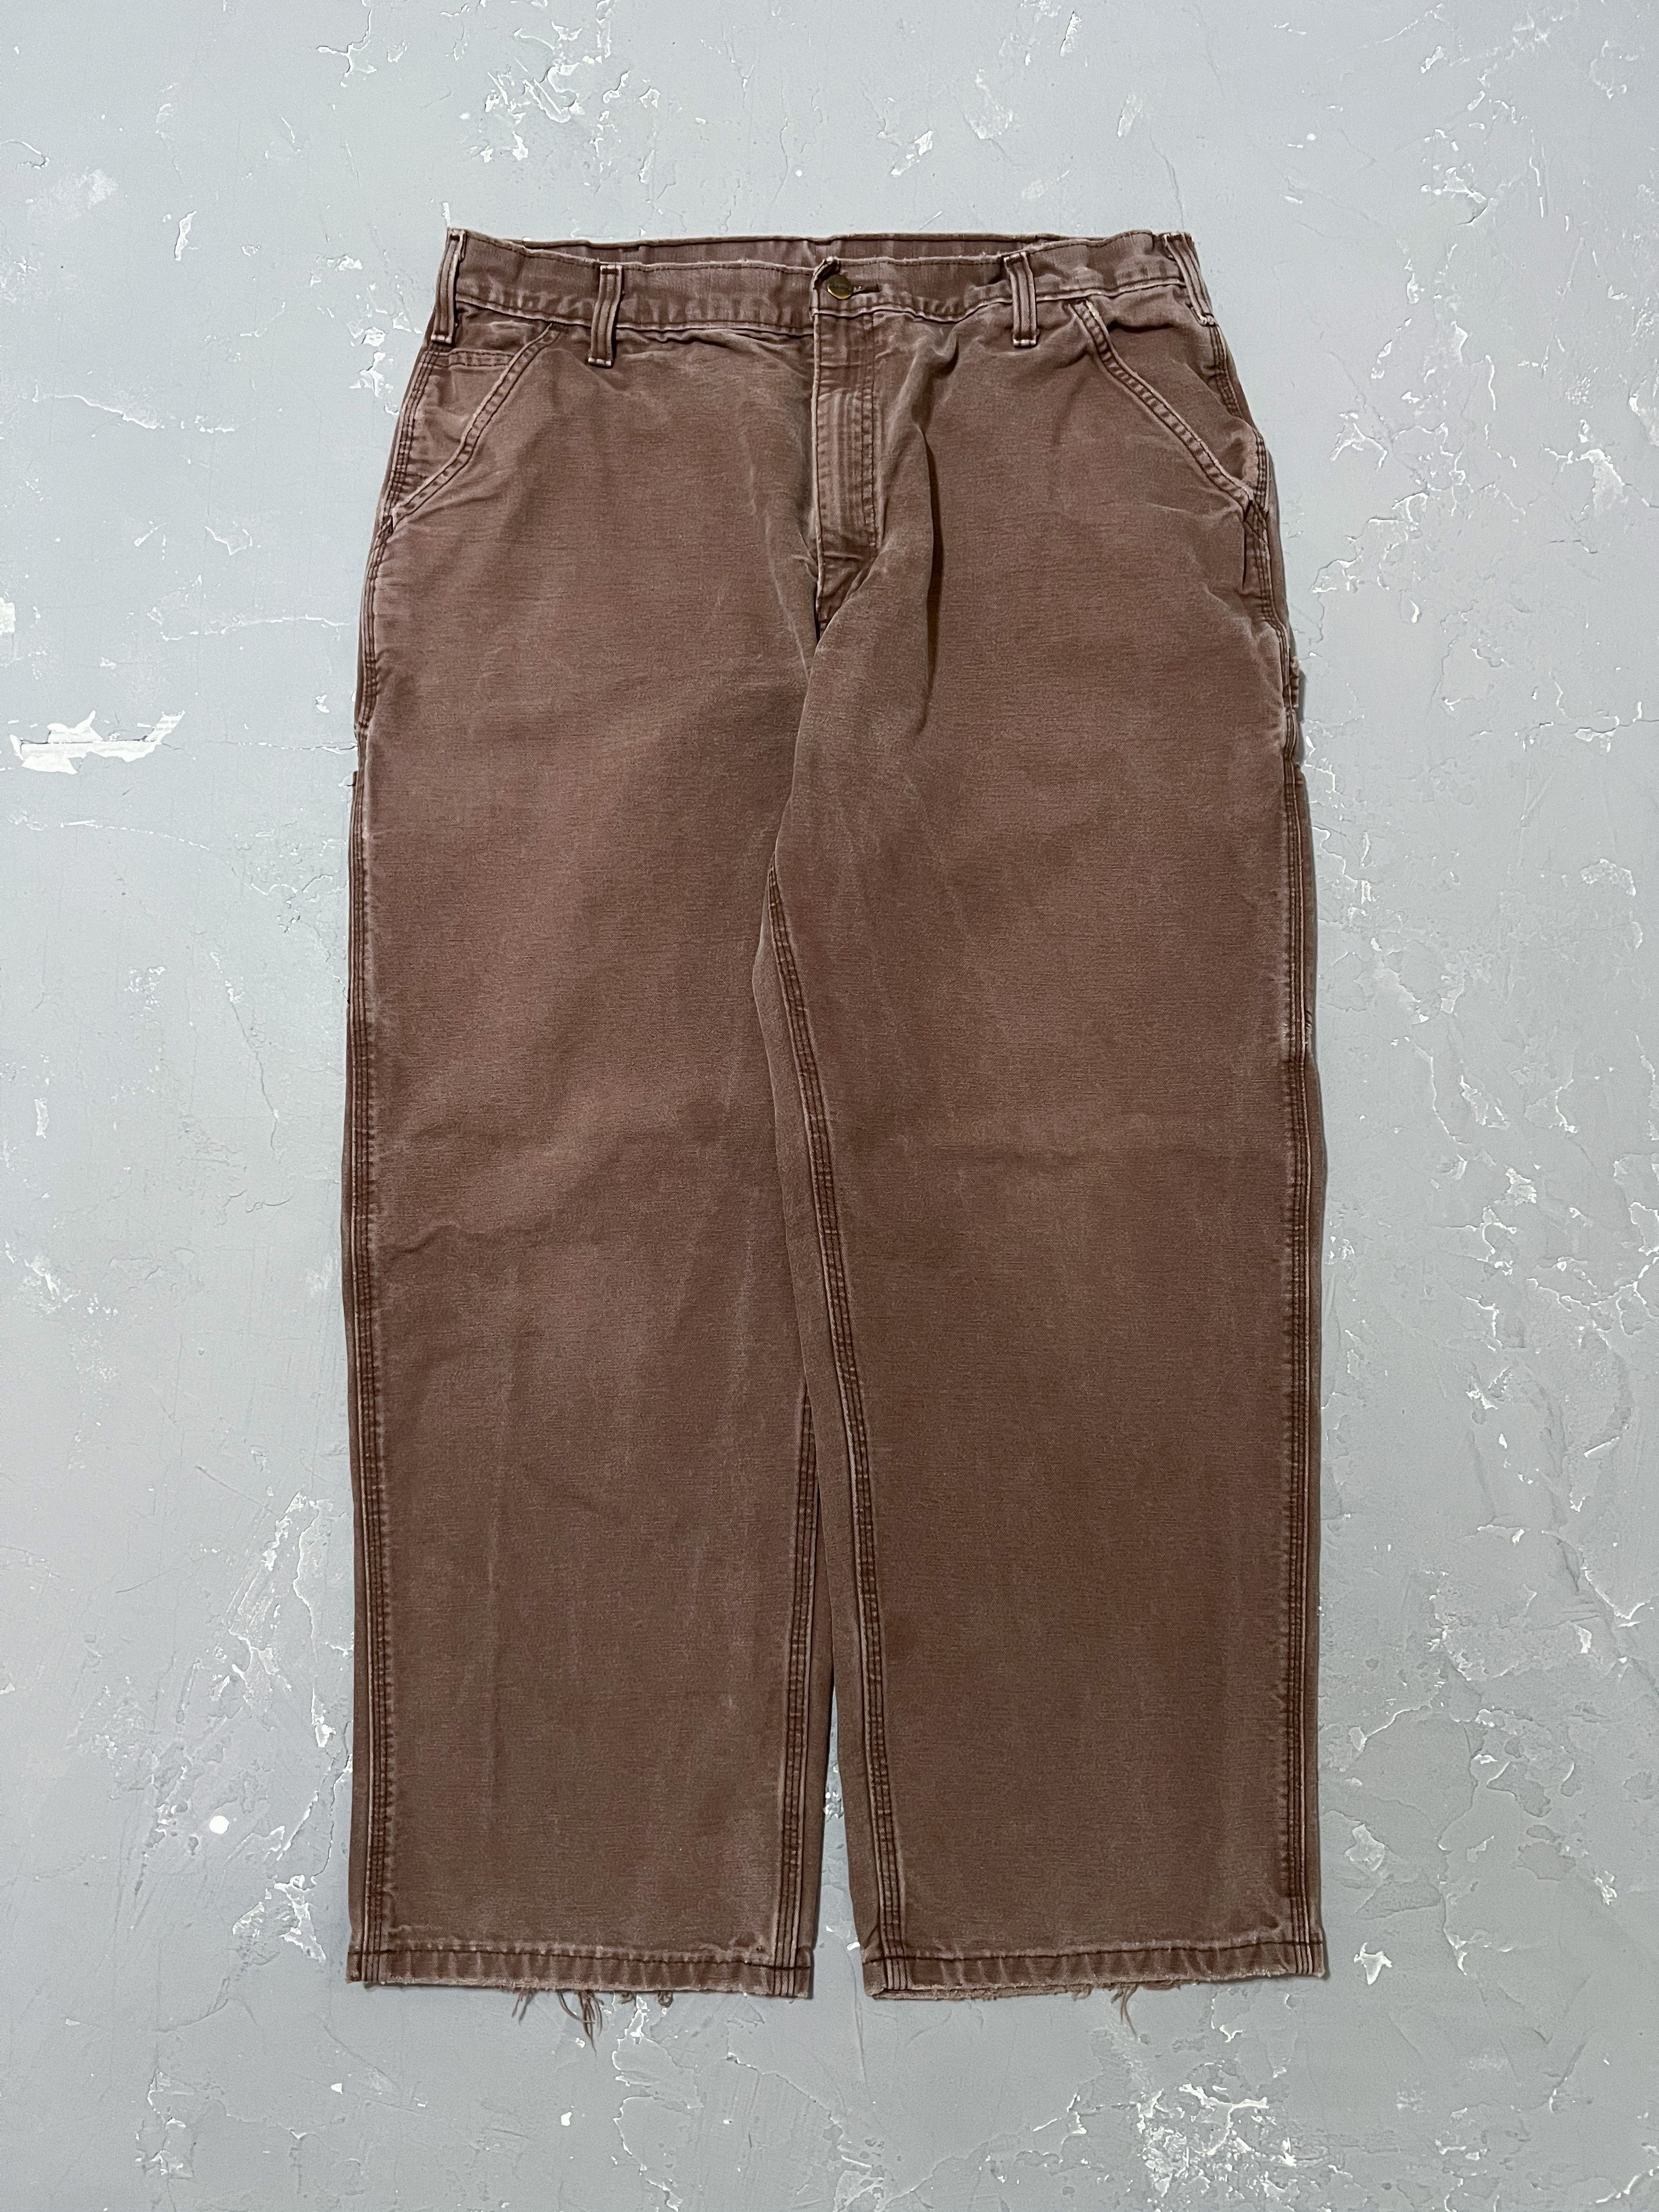 Carhartt Faded Mocha Carpenter Pants [36 x 30]